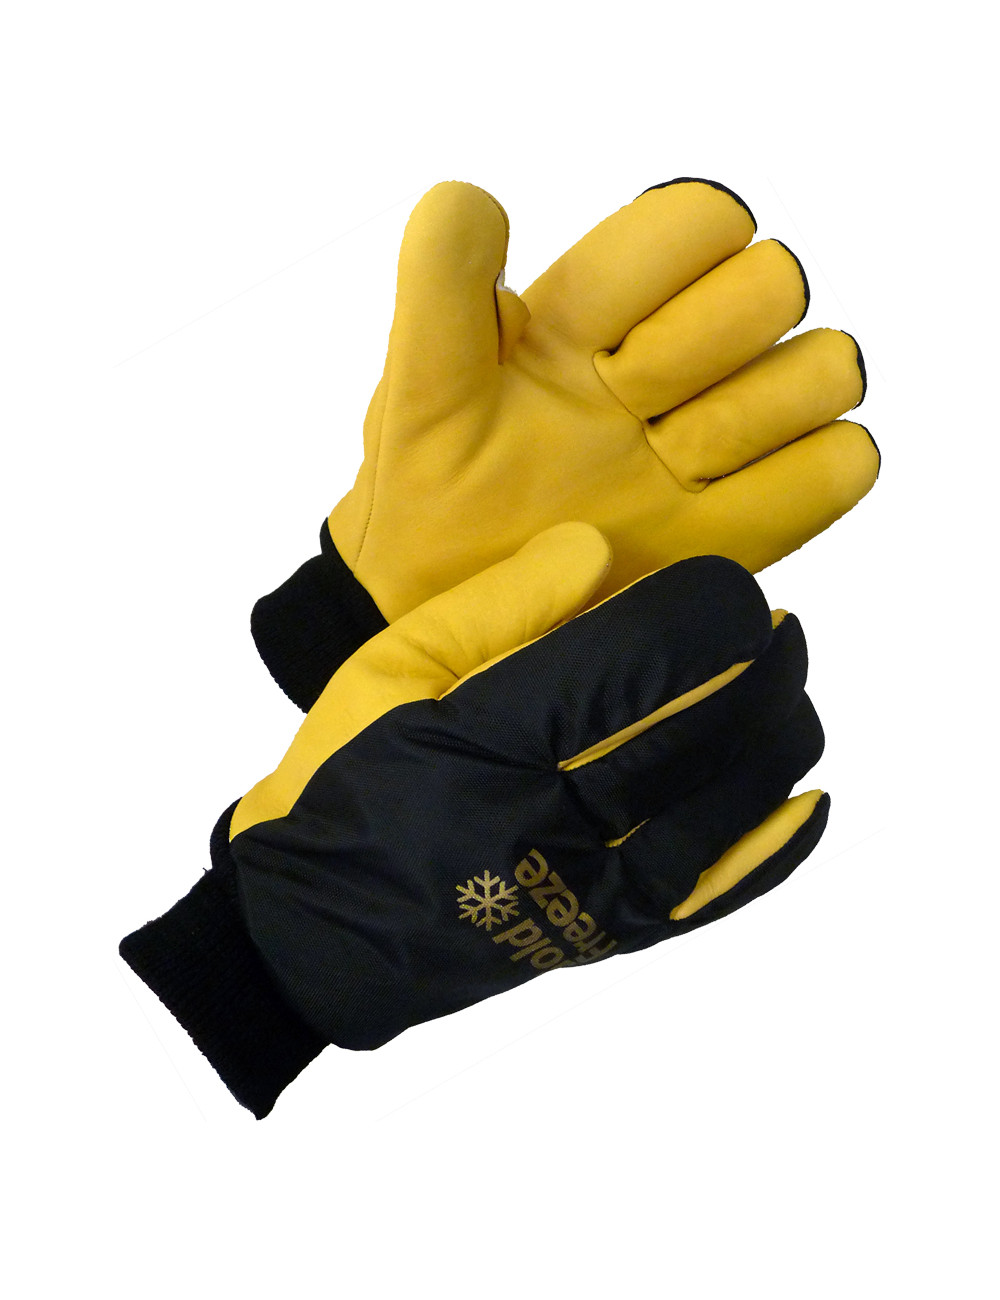 Polar range coldstore coldstore gloves, Goldfreeze